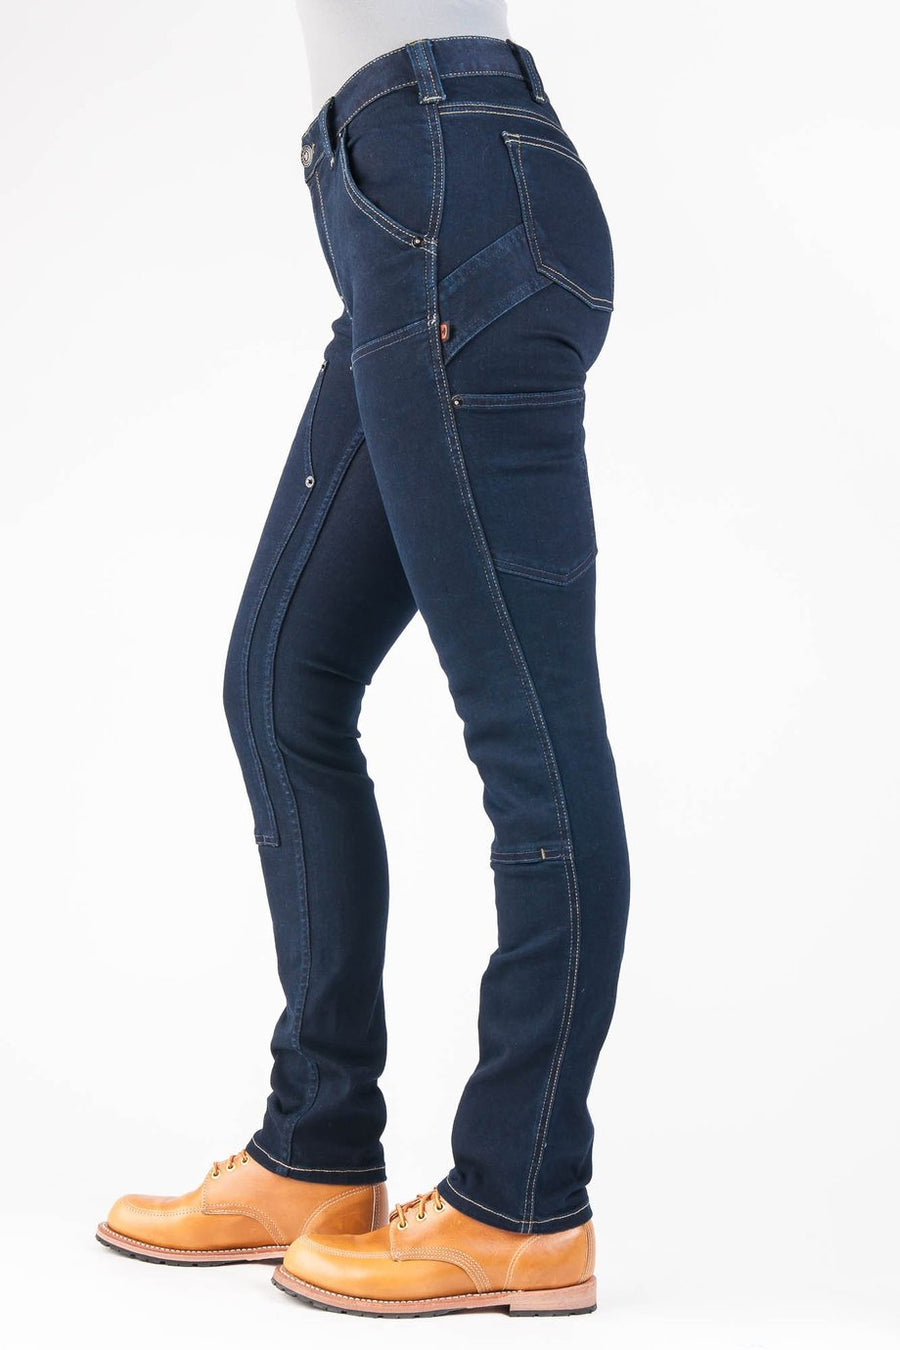 Dovetail Workwear Maven Slim Pants, No Fade Denim, 30 Inseam - Womens, FREE SHIPPING in Canada